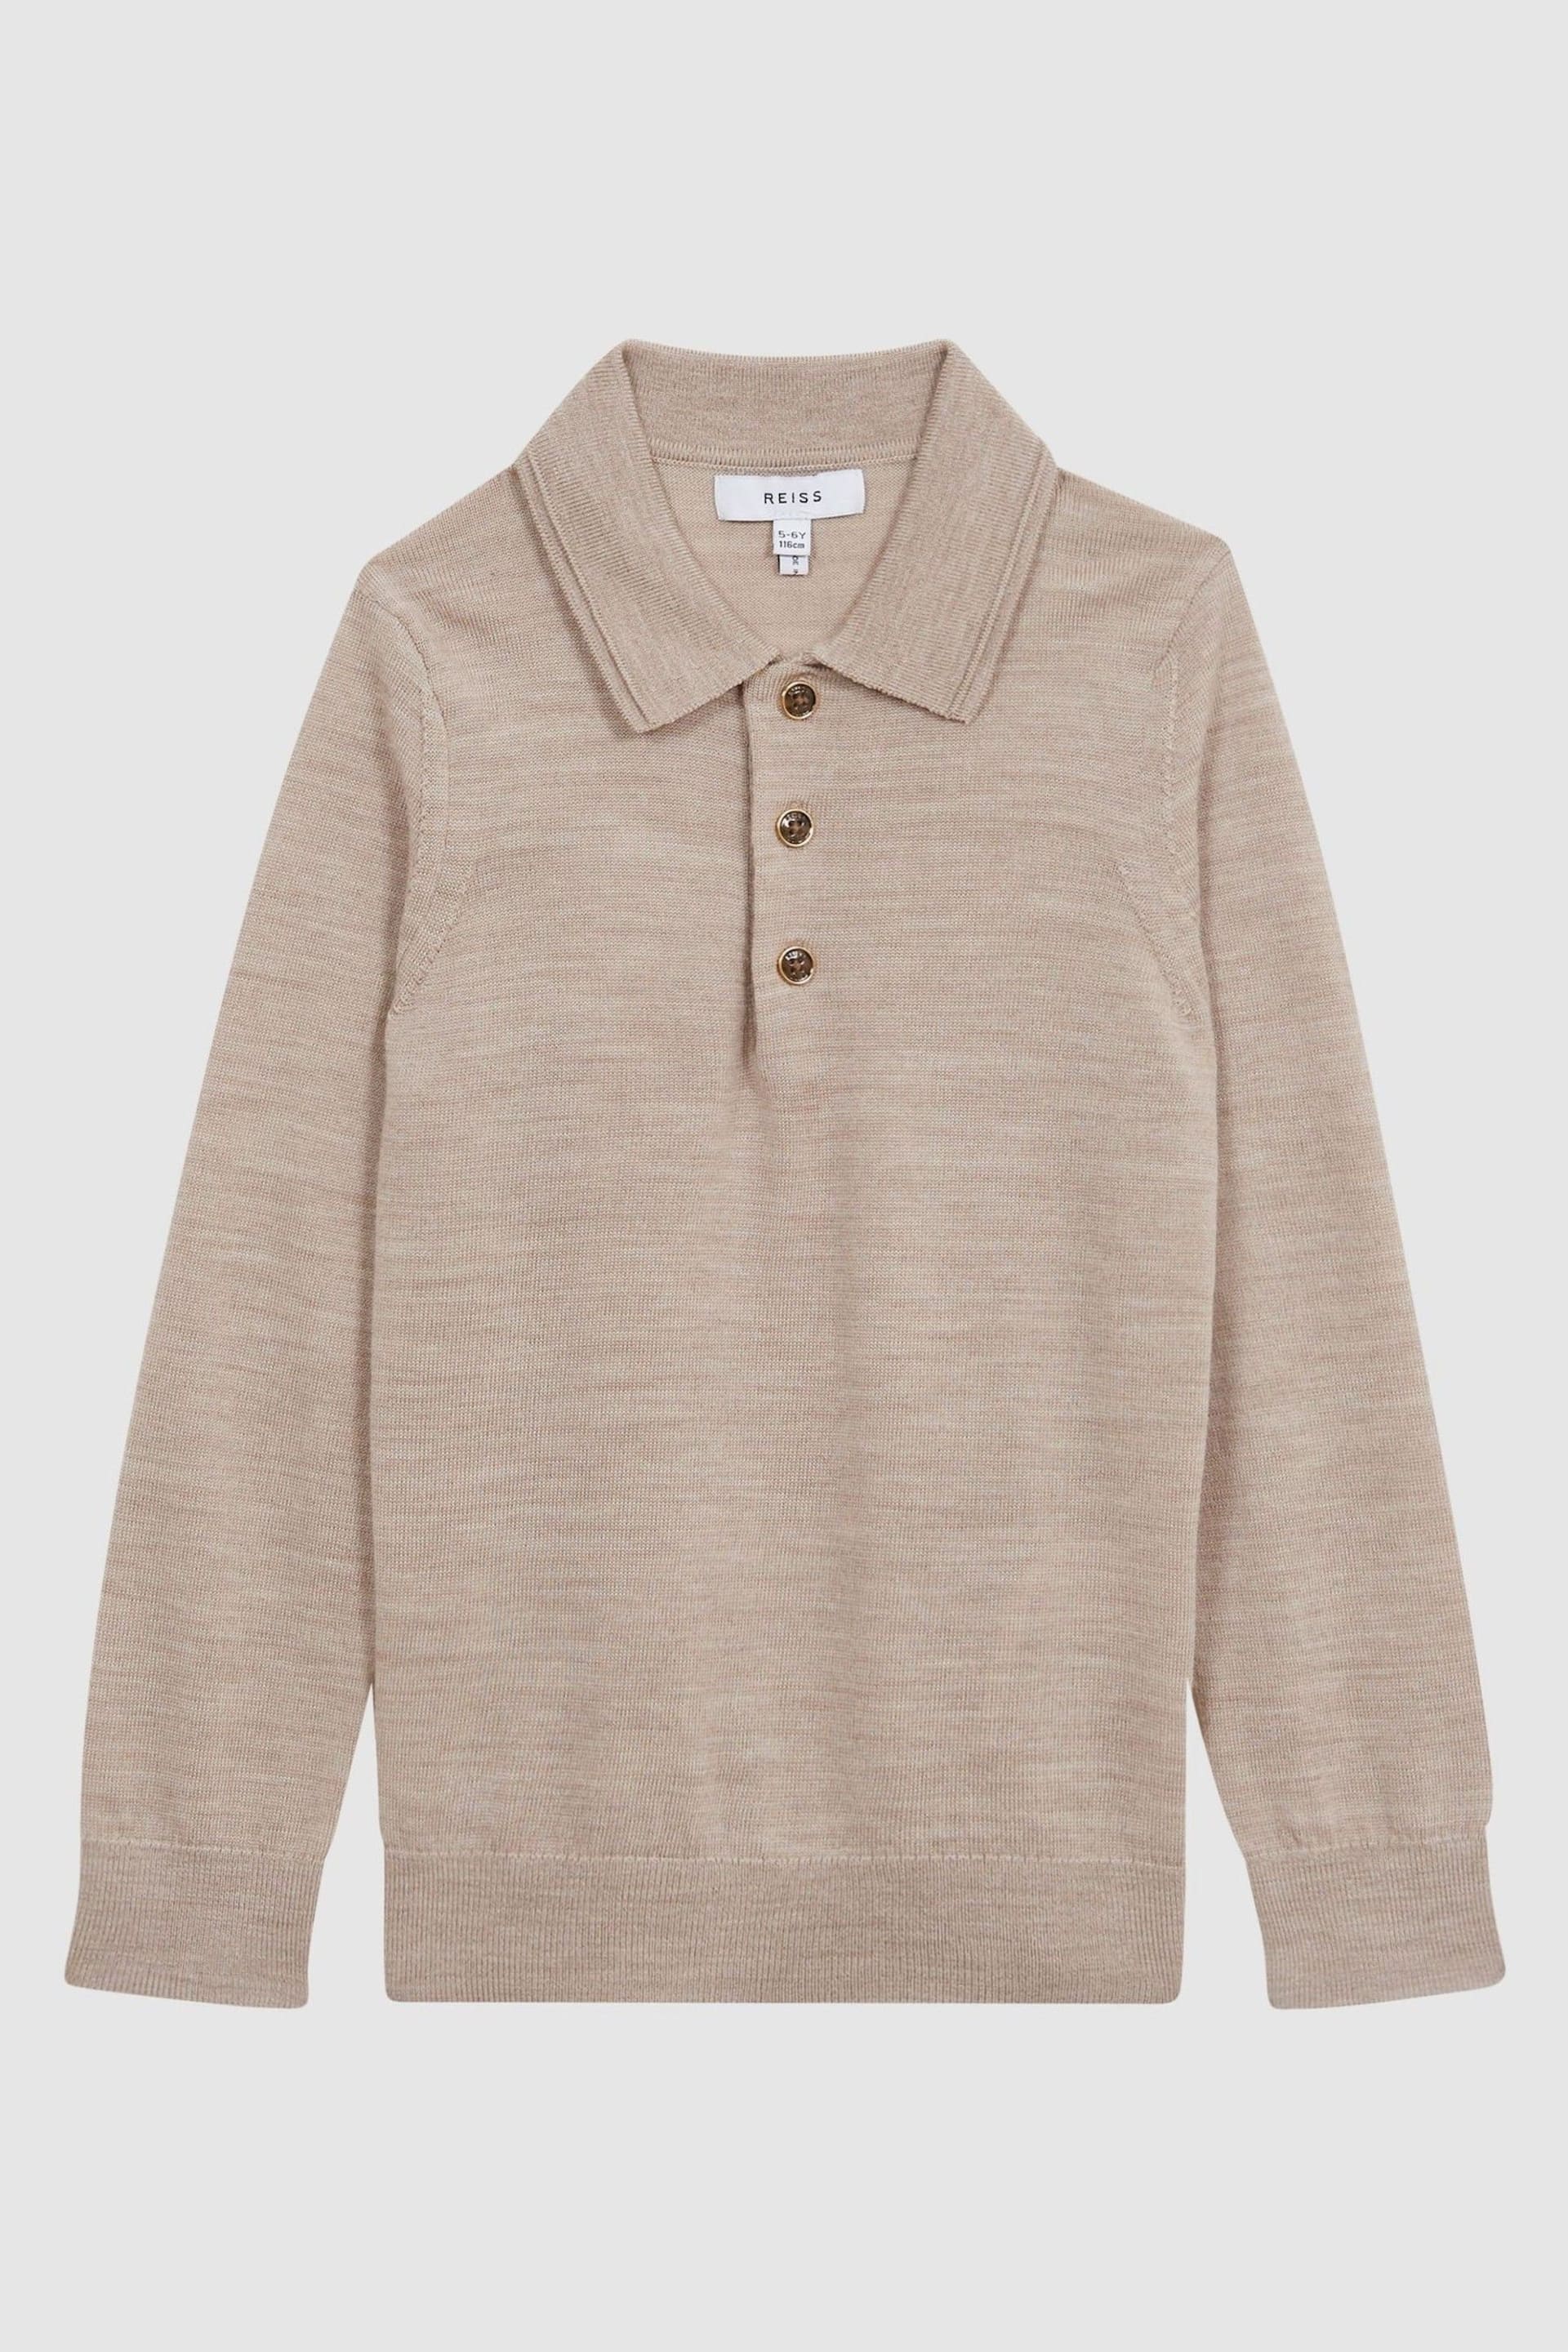 Reiss Wheat Melange Trafford Junior Merino Wool Polo Shirt - Image 2 of 6